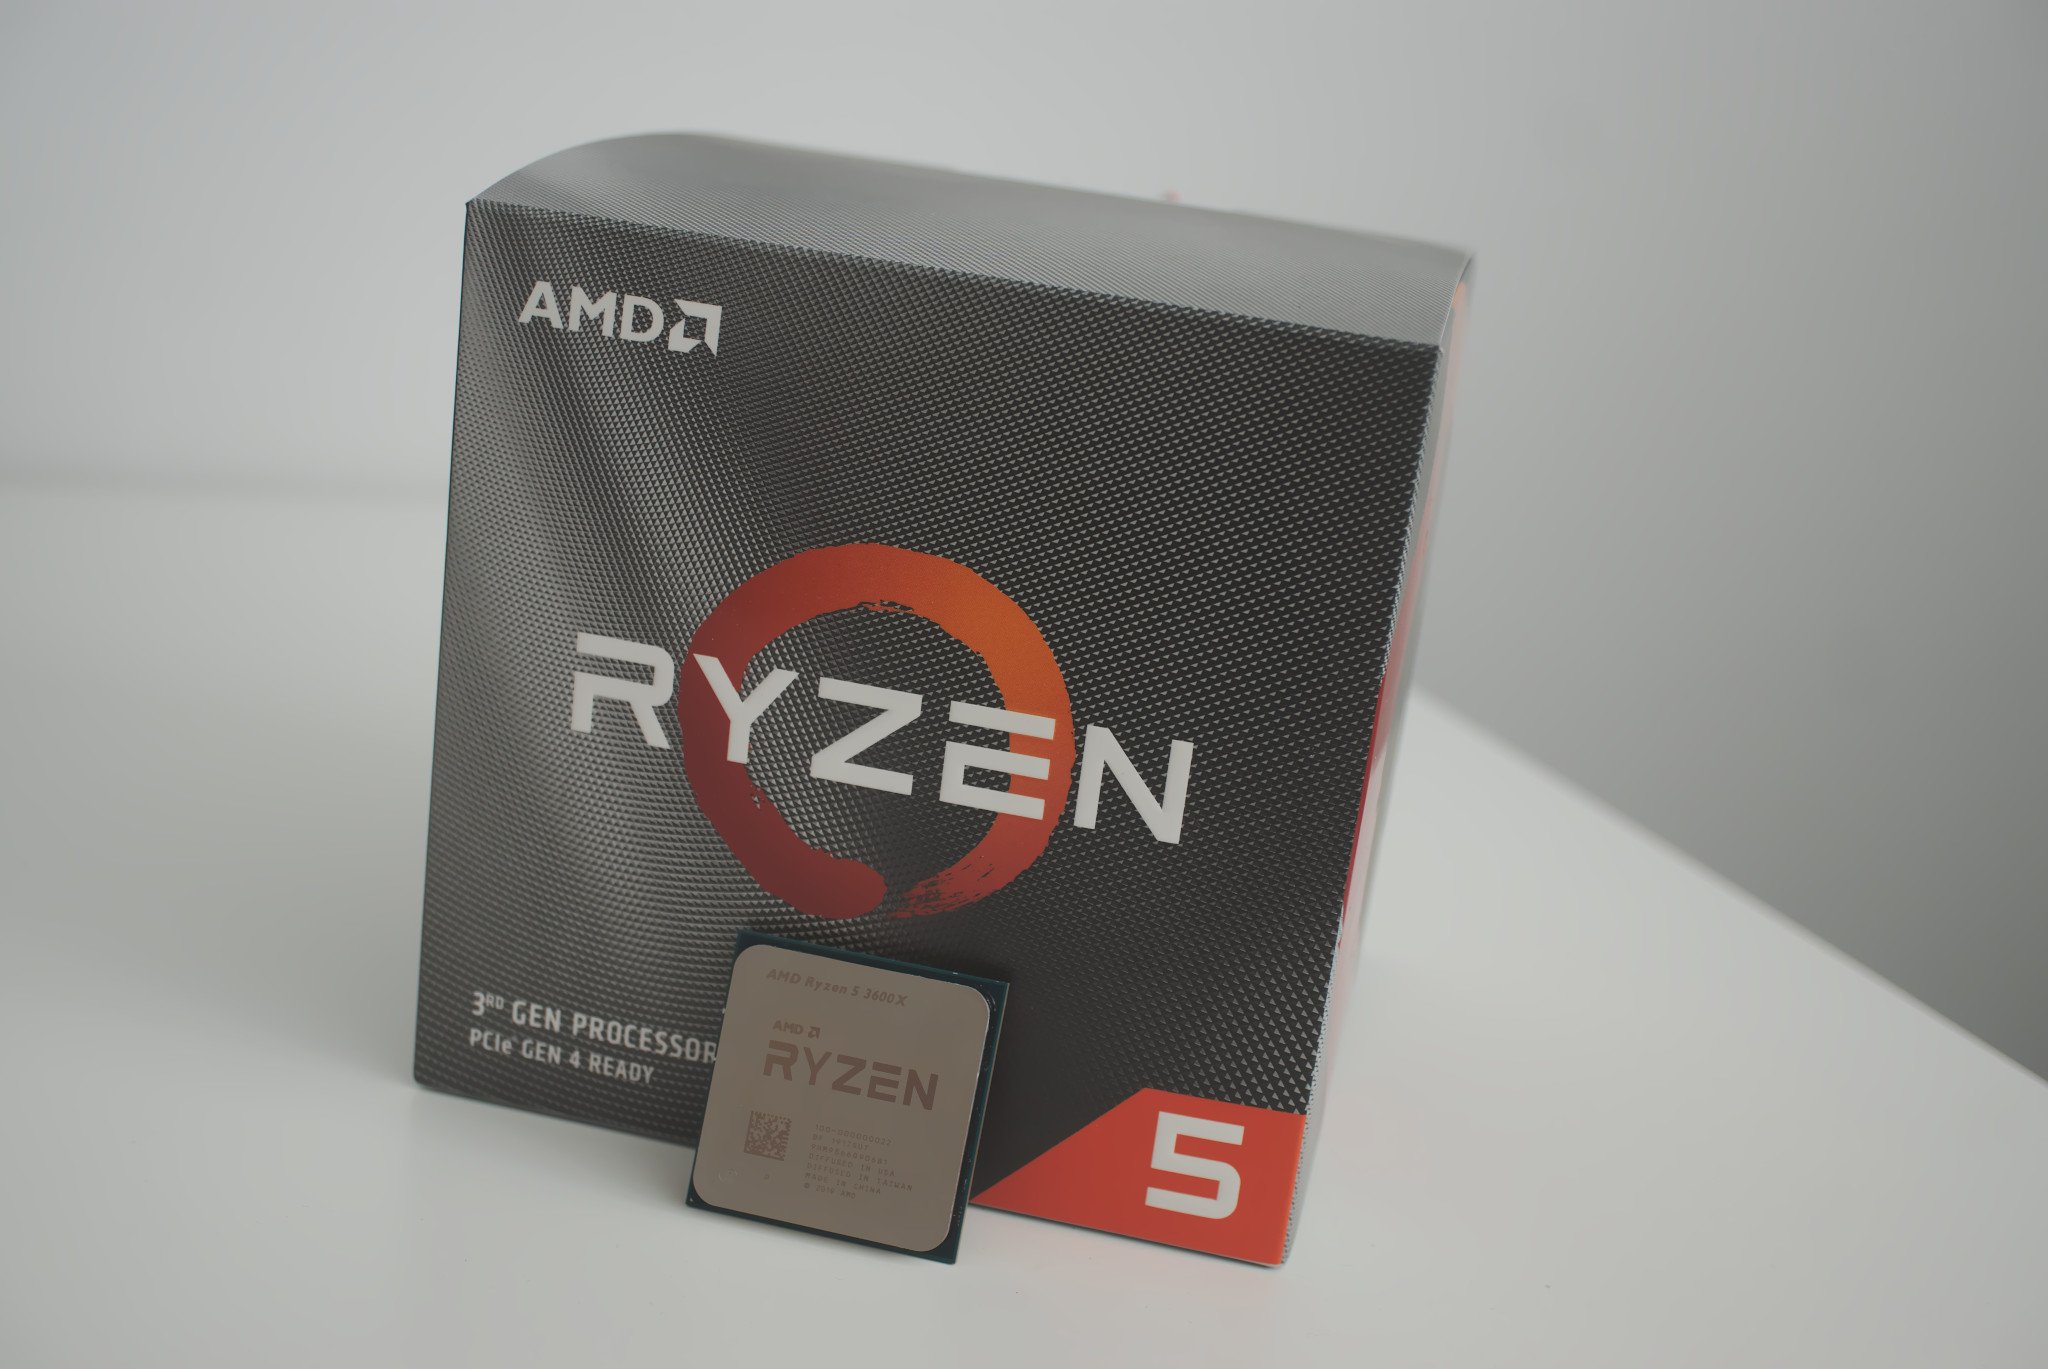 AMD Ryzen 4000-series processor bests Intel Core in power tests | Windows Central